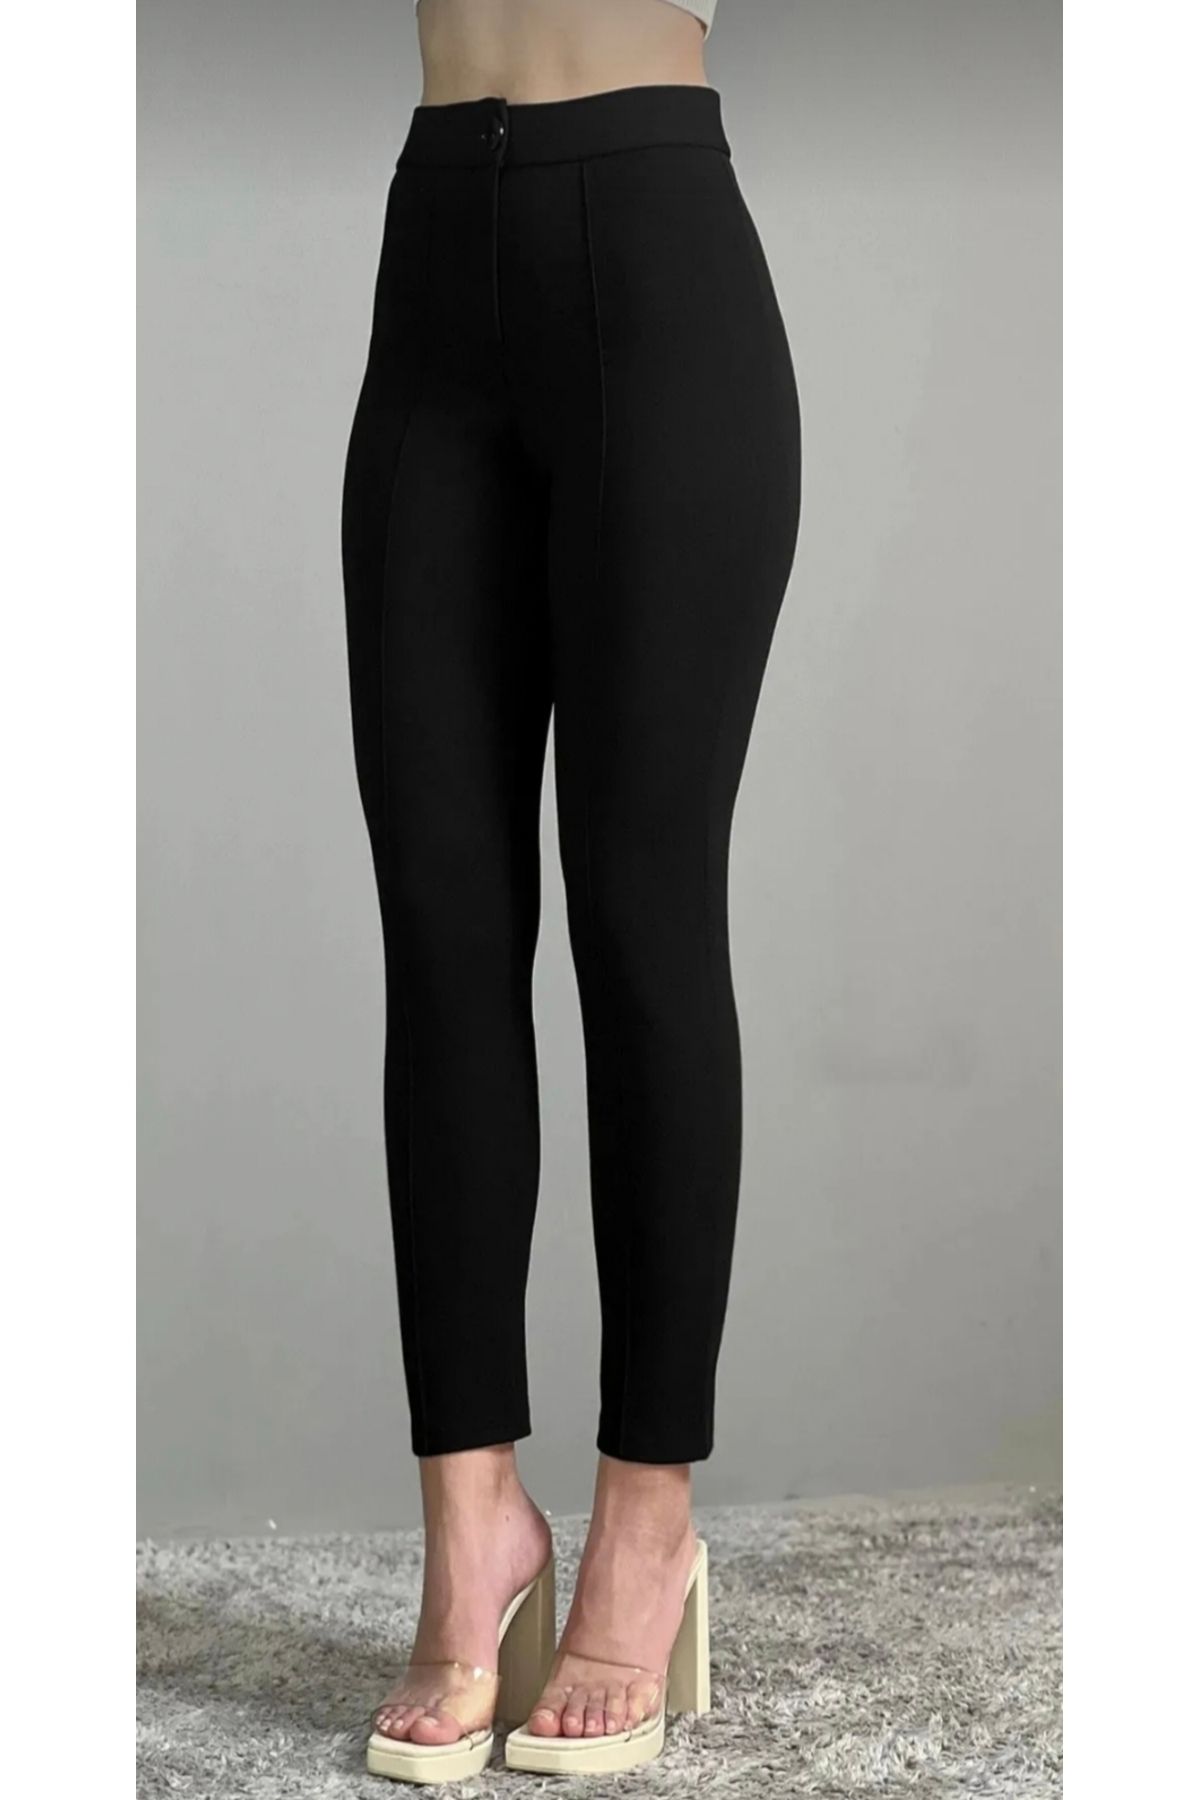 Zara Model Ultra Yüksek Bel Pensli Deri Pantolon Siyah